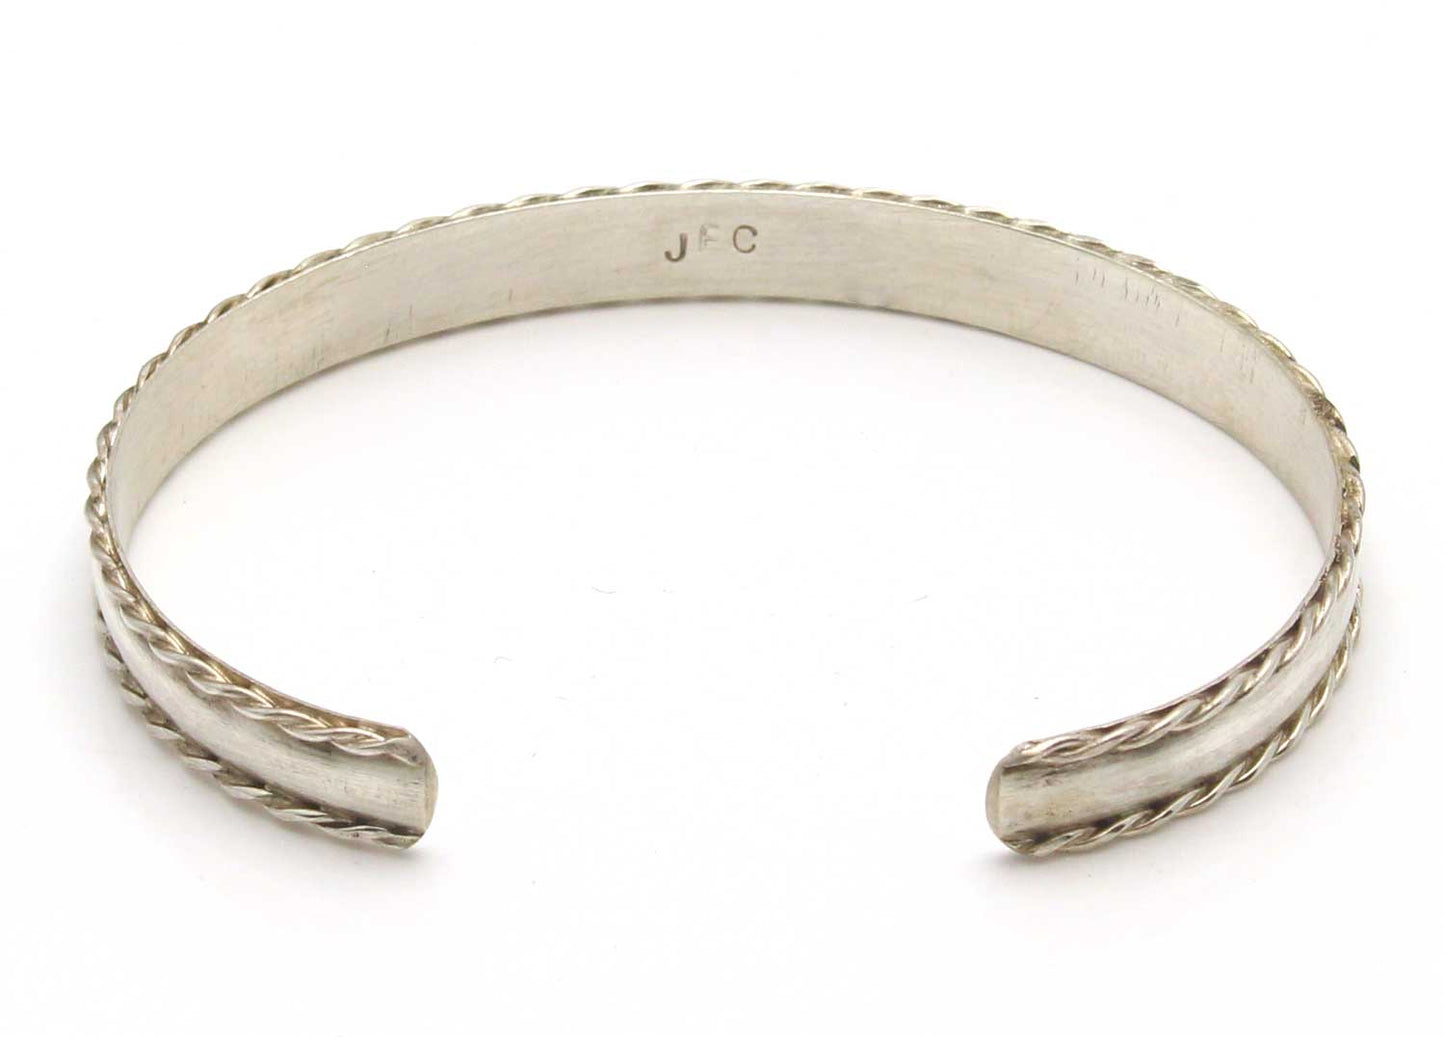 Zuni Multi Stone Silver Inlay Bracelet by Chavez